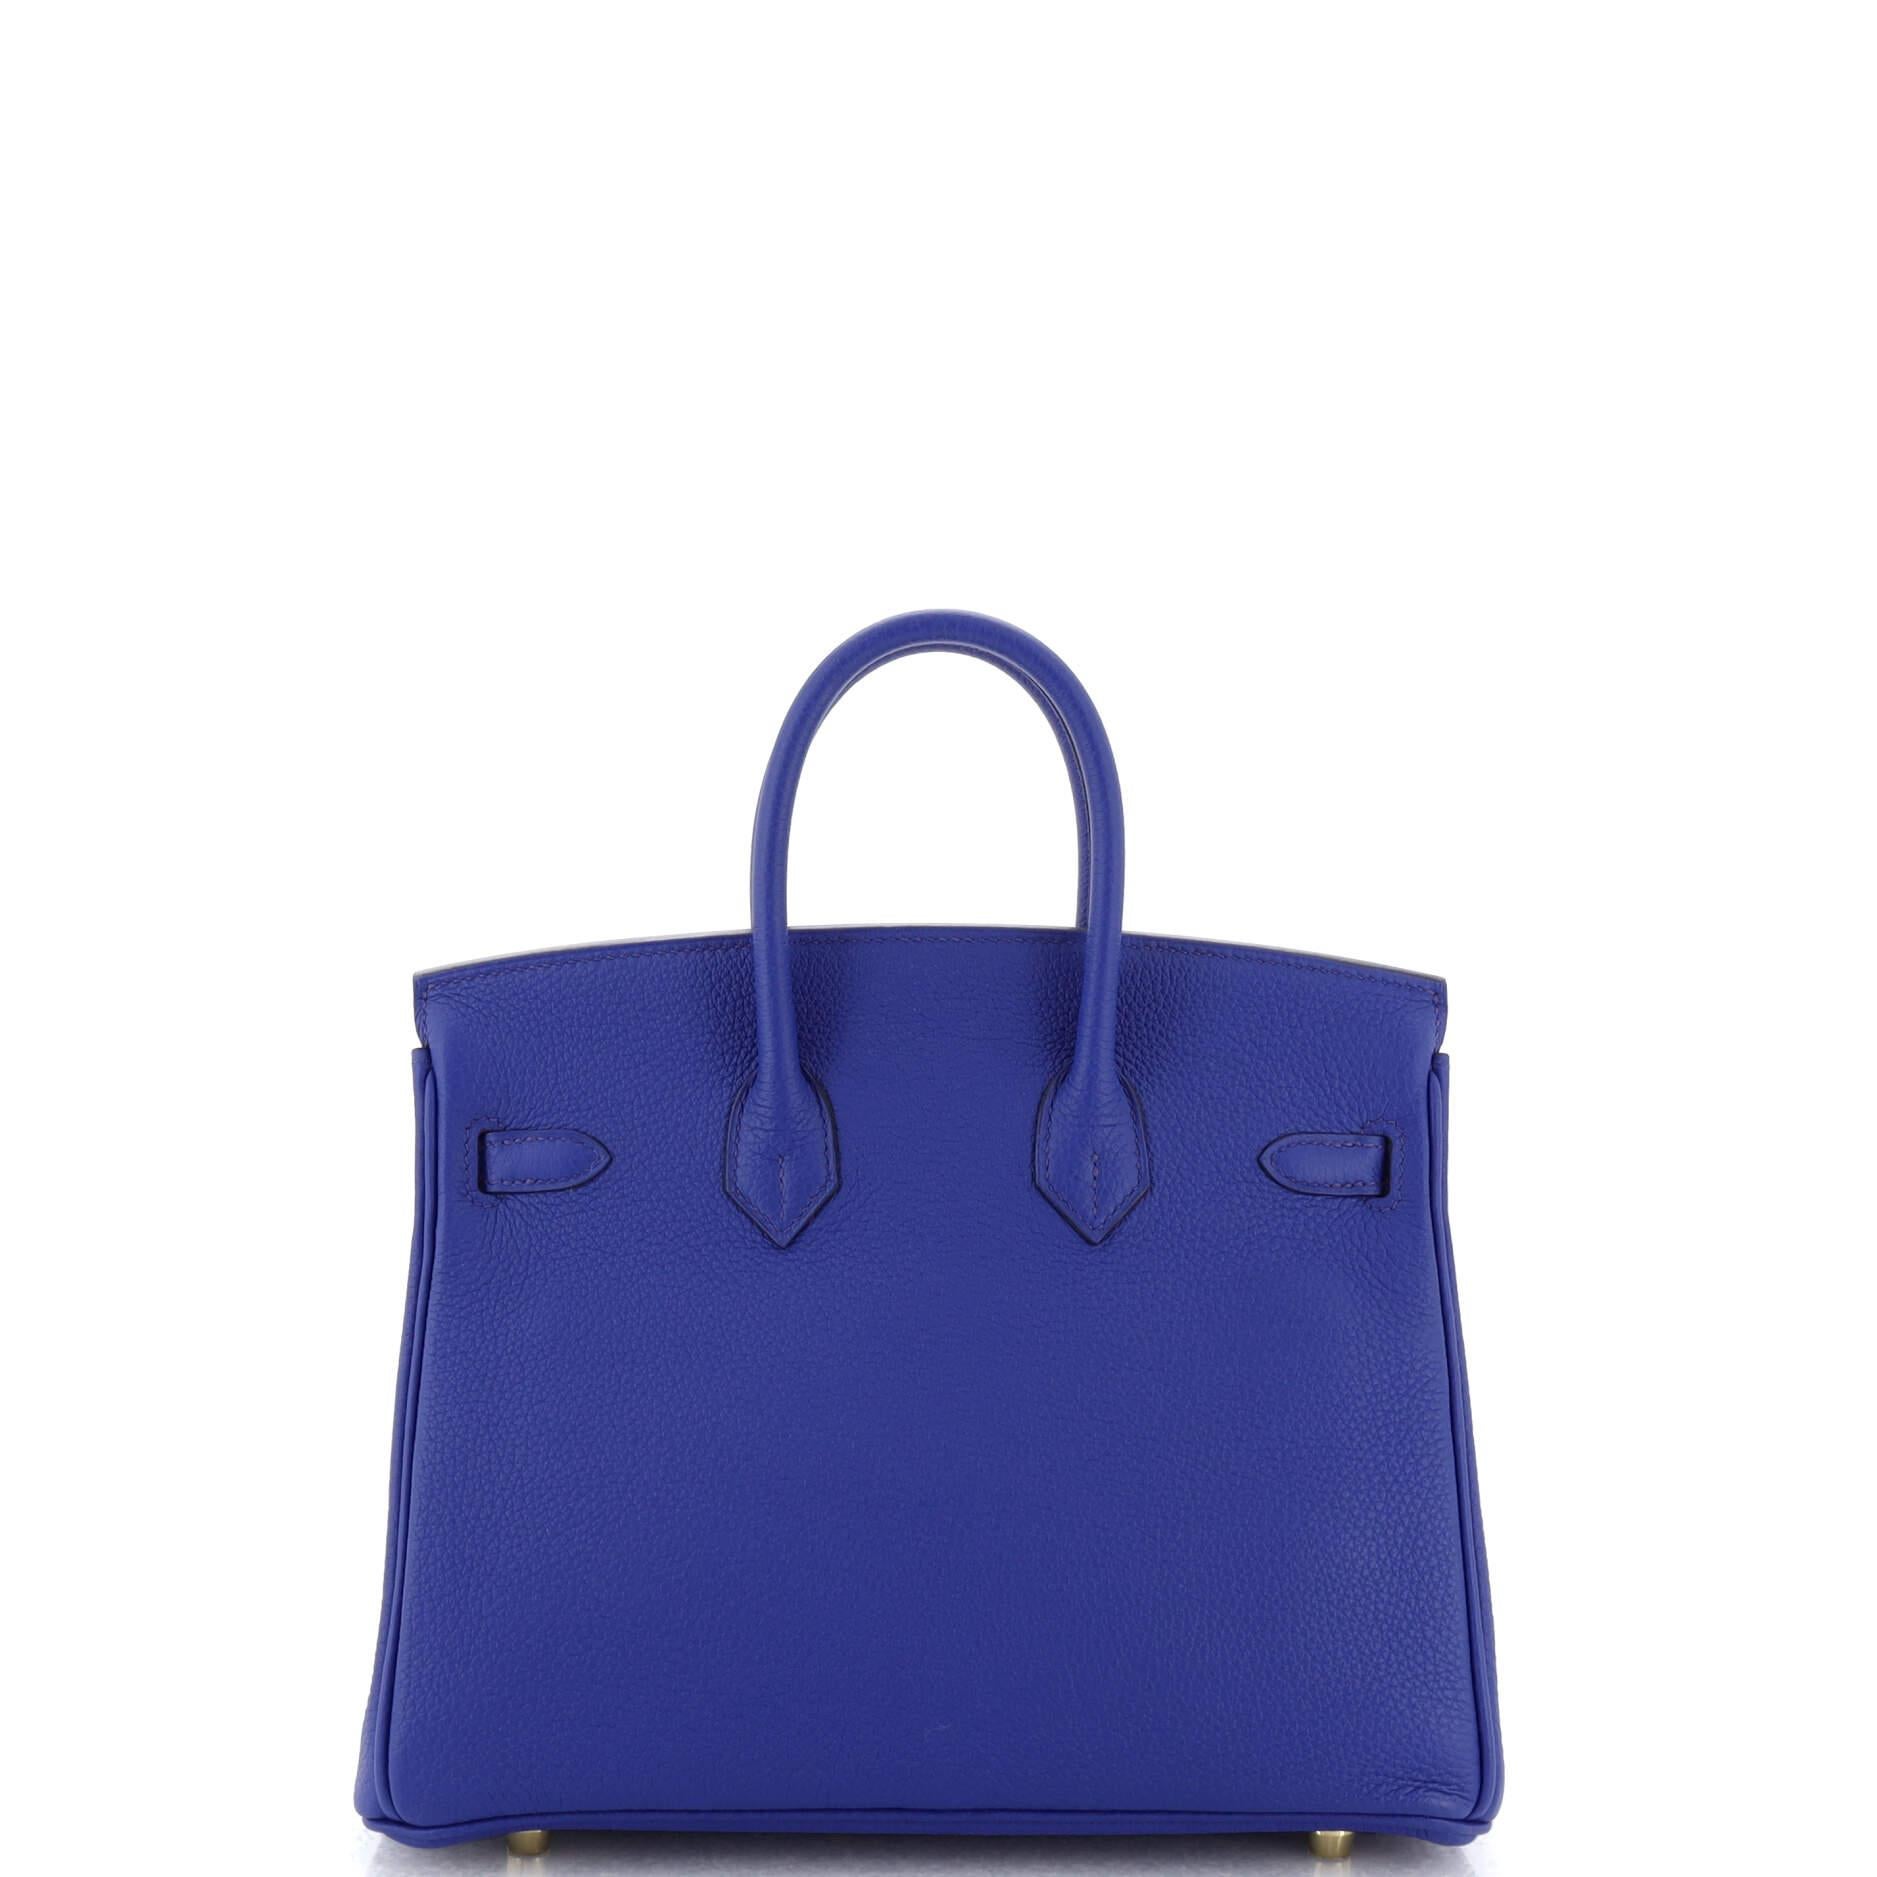 Women's Hermes Birkin Handbag Bleu Royal Togo with Gold Hardware 25